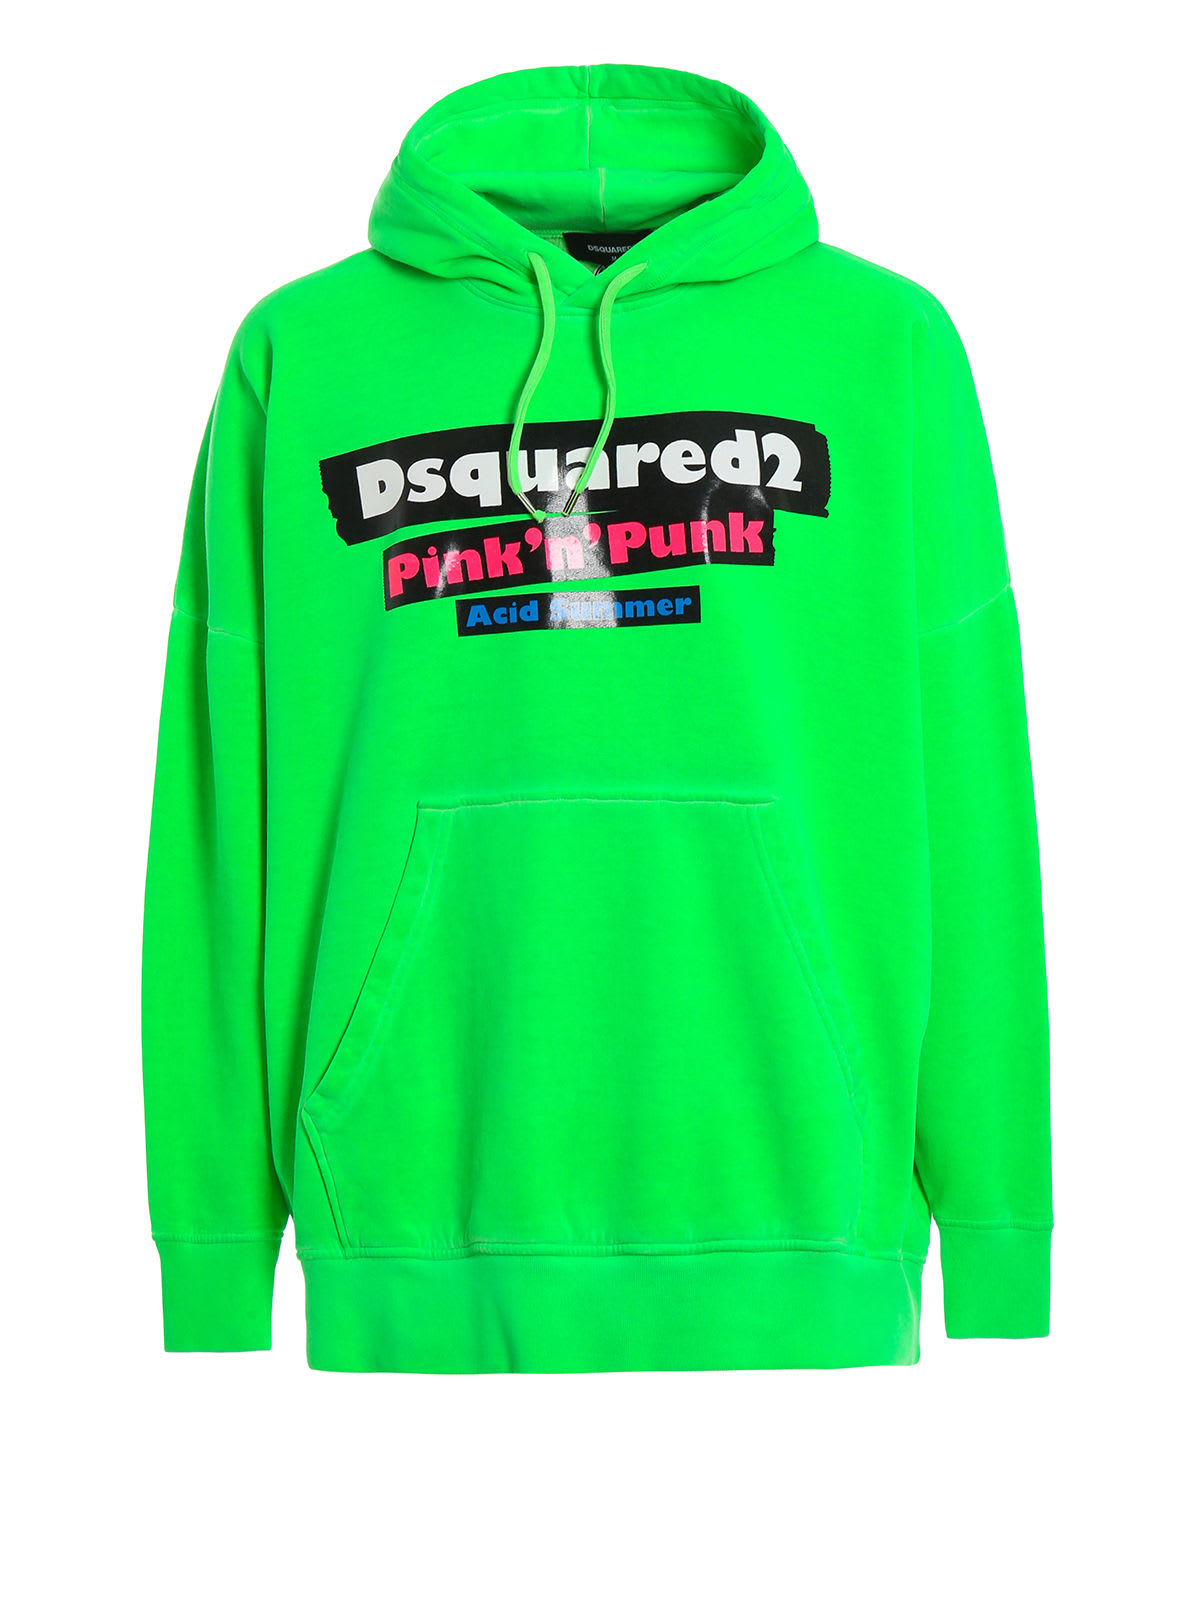 dsquared2 punk hoodie